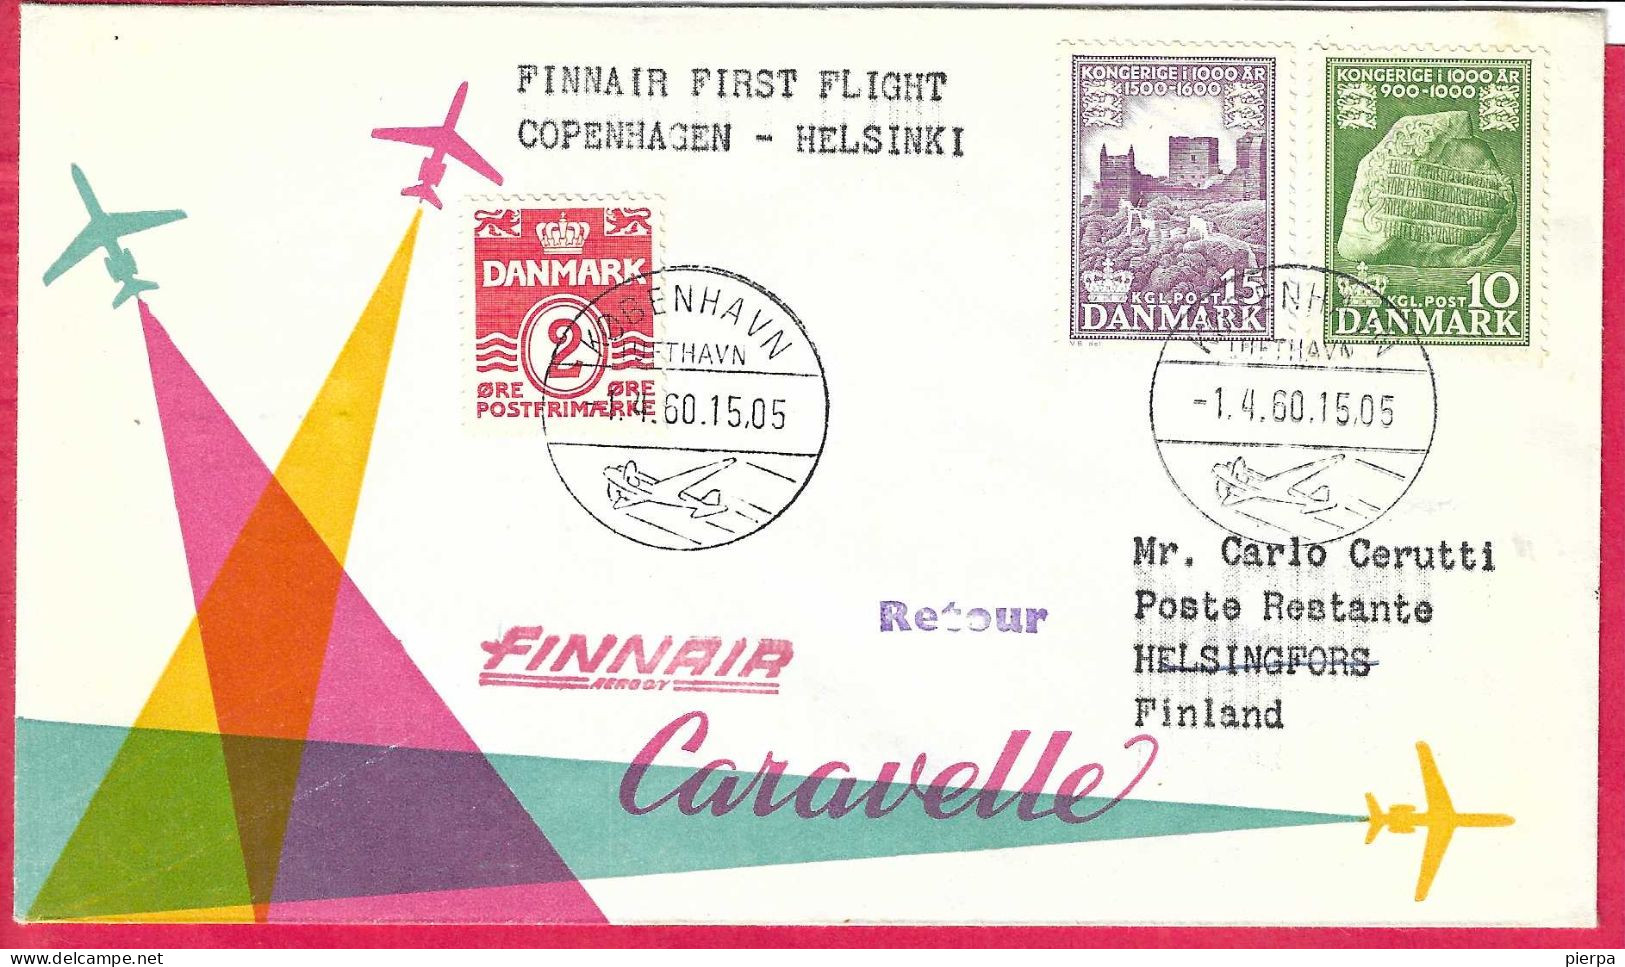 DANMARK - FIRST CARAVELLE FLIGHT - FINNAIR - FROM KOBENHAVN TO HELSINKY *1.4.60* ON OFFICIAL COVER - Poste Aérienne